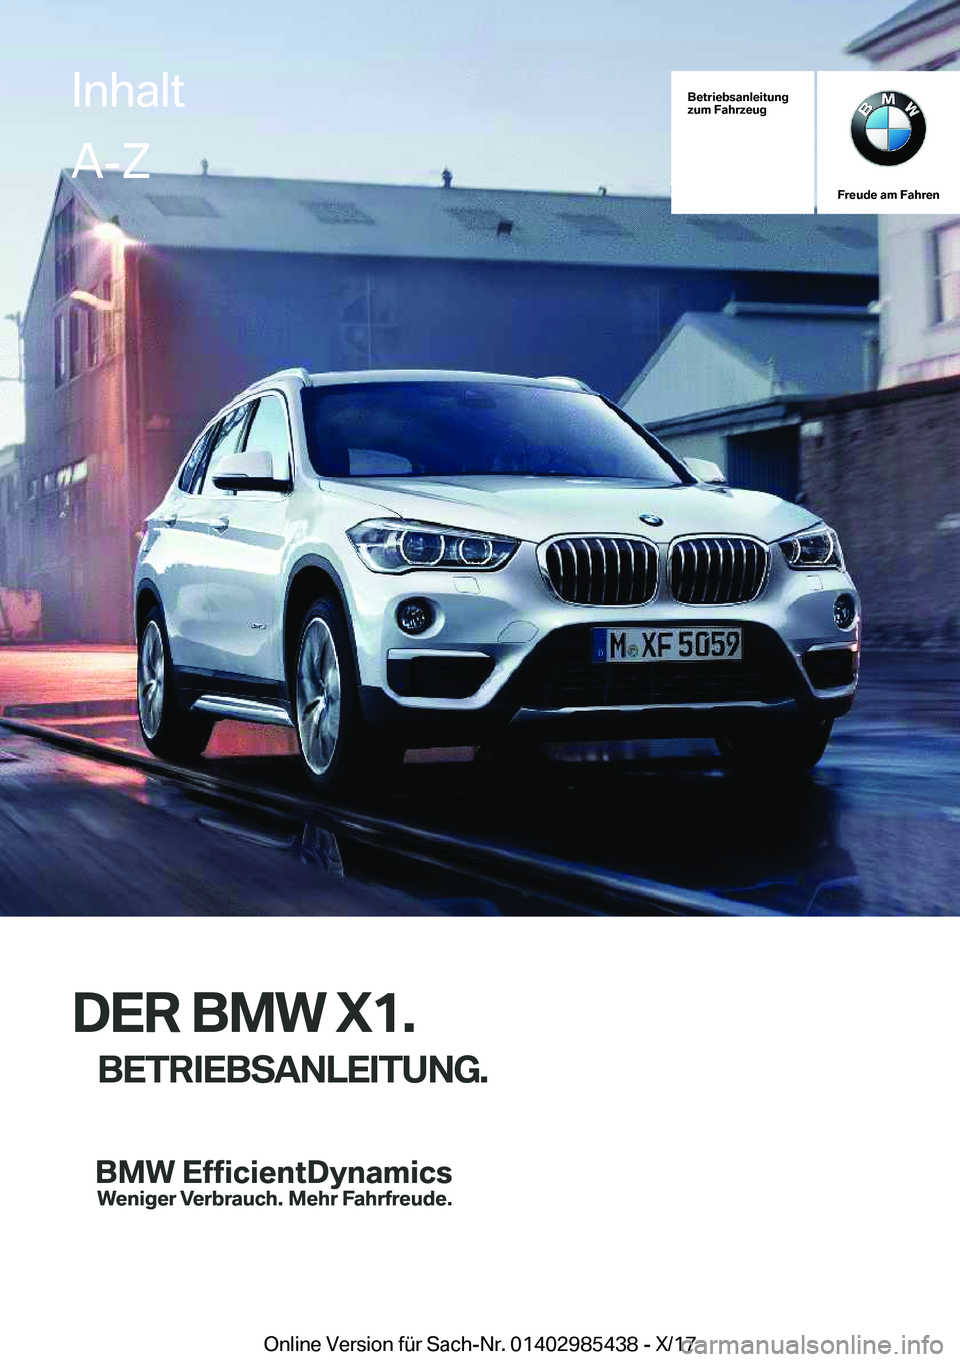 BMW X1 2018  Betriebsanleitungen (in German) �B�e�t�r�i�e�b�s�a�n�l�e�i�t�u�n�g
�z�u�m��F�a�h�r�z�e�u�g
�F�r�e�u�d�e��a�m��F�a�h�r�e�n
�D�E�R��B�M�W��X�1�.
�B�E�T�R�I�E�B�S�A�N�L�E�I�T�U�N�G�.
�I�n�h�a�l�t�A�-�Z
�O�n�l�i�n�e� �V�e�r�s�i�o�n